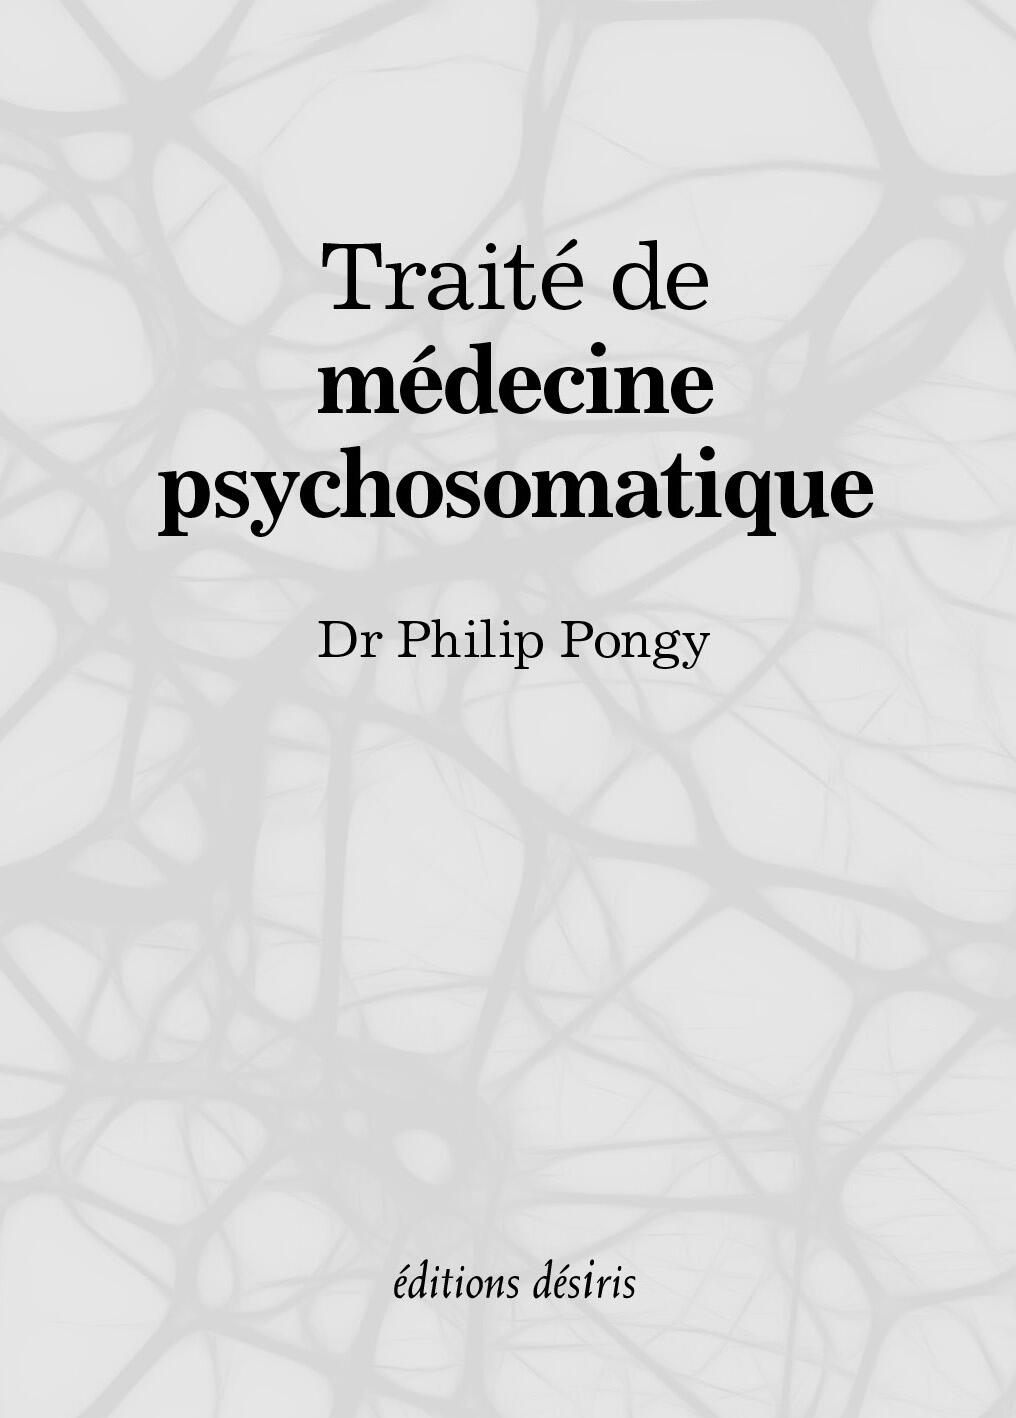 Treatise of Psychosomatic Medicine